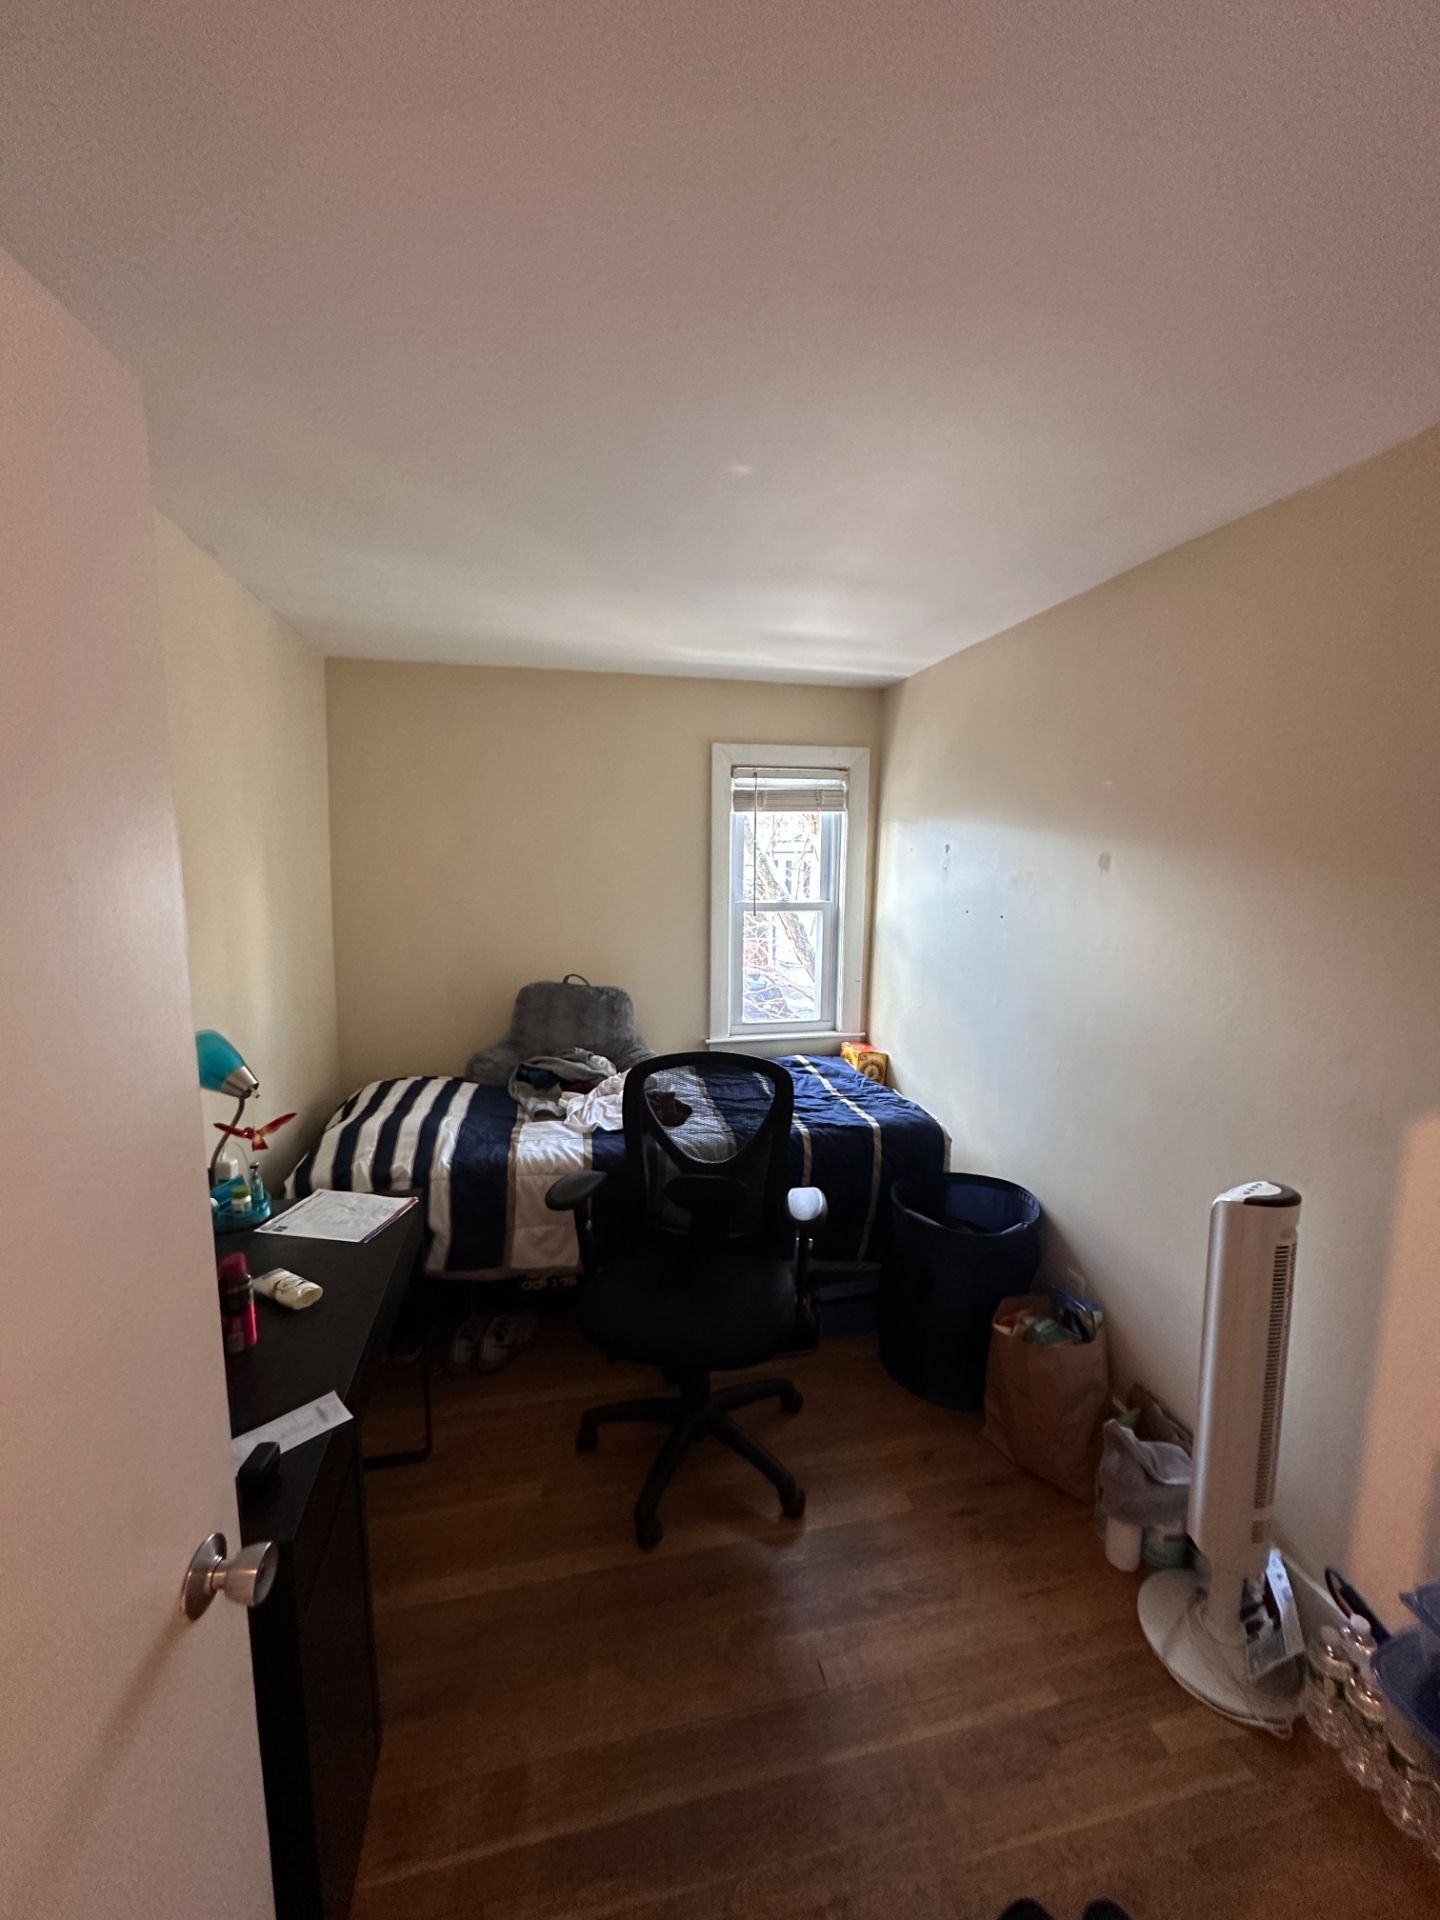 Photos of apartment on Columbia St.,Cambridge MA 02139